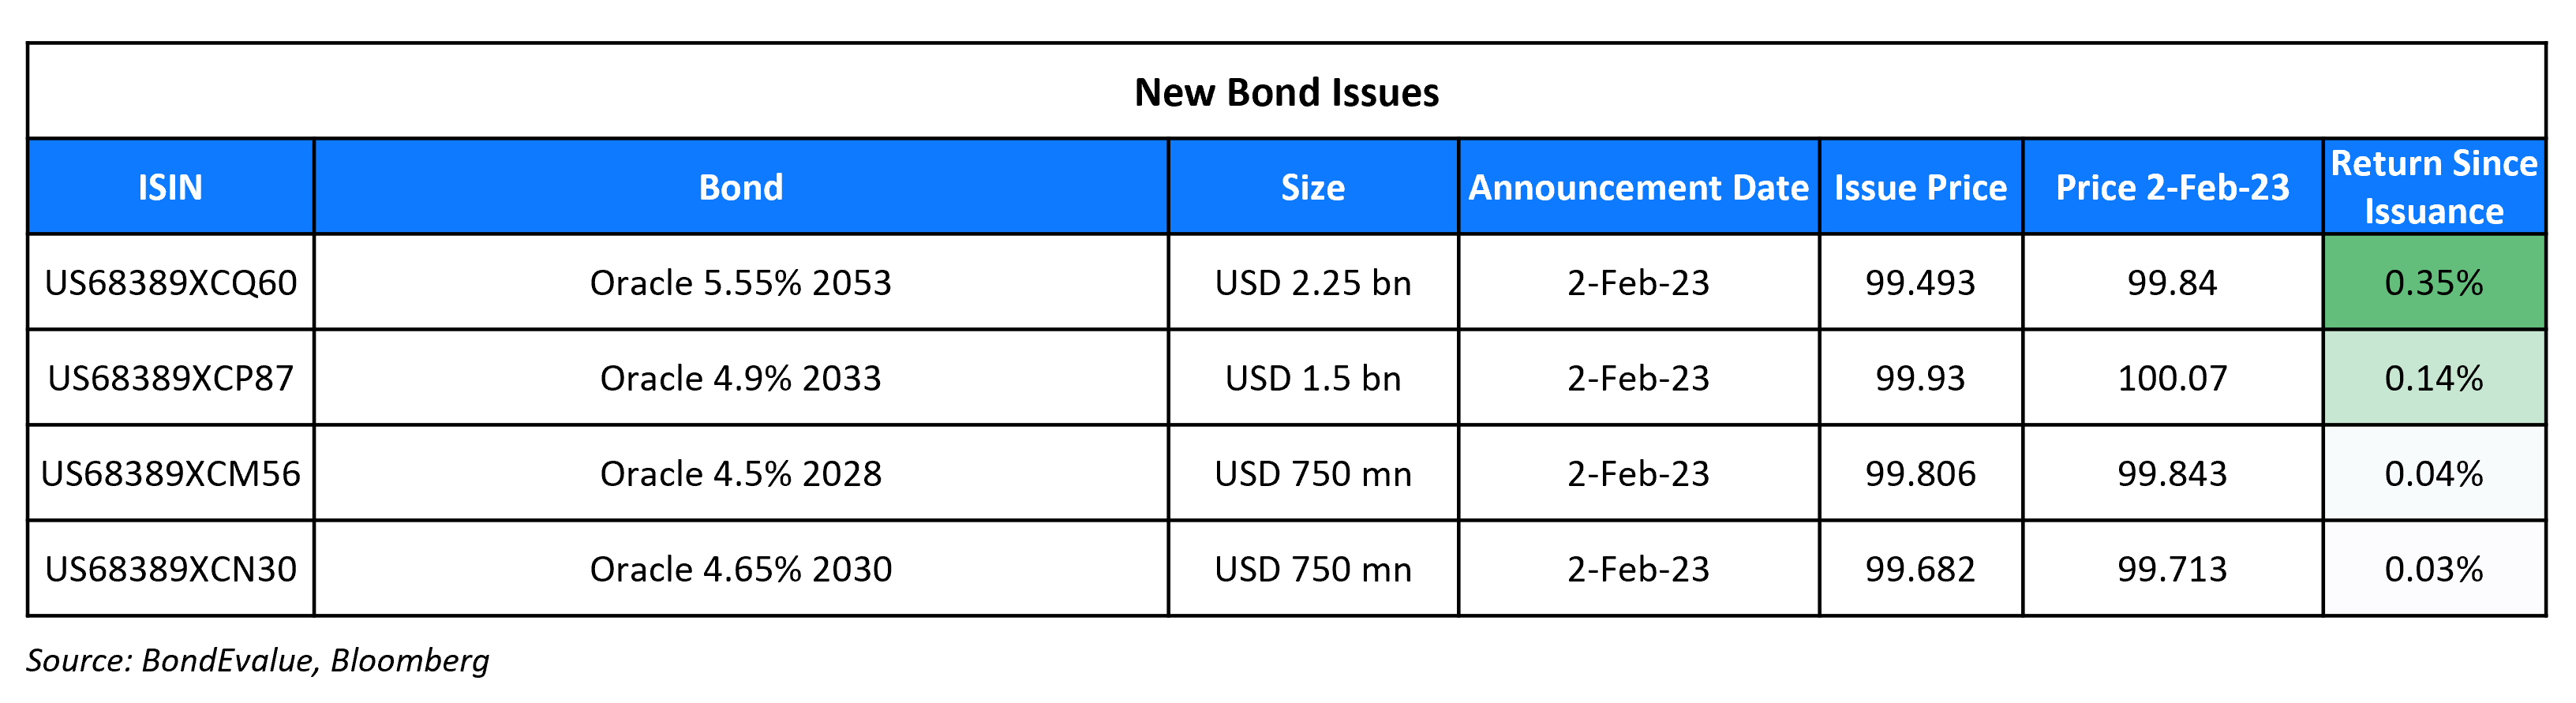 New Bond Issues 3 Feb 23